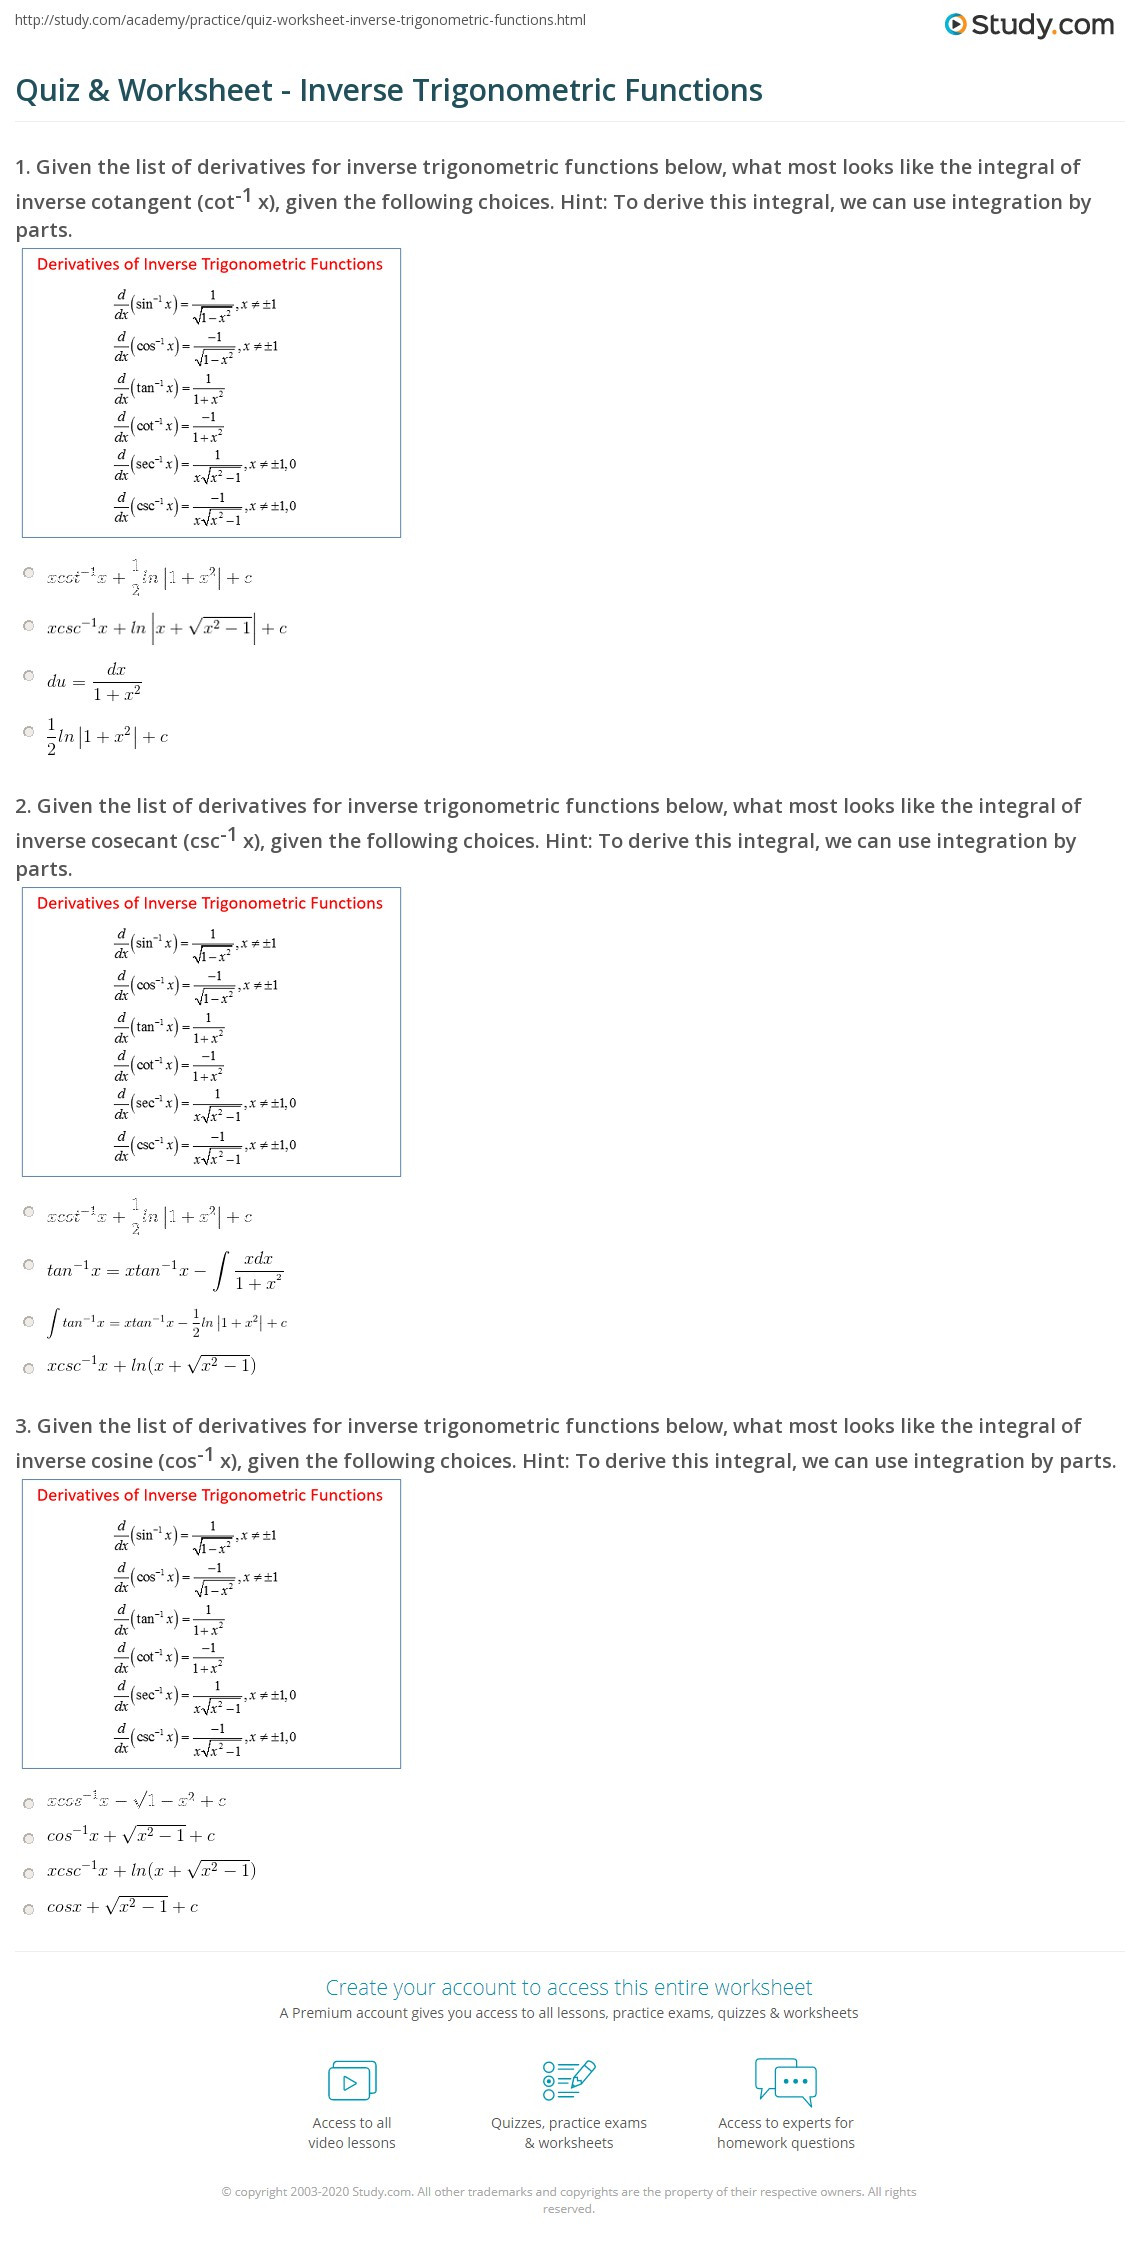 Inverse Trigonometric Functions Worksheet Quiz &amp; Worksheet Inverse Trigonometric Functions